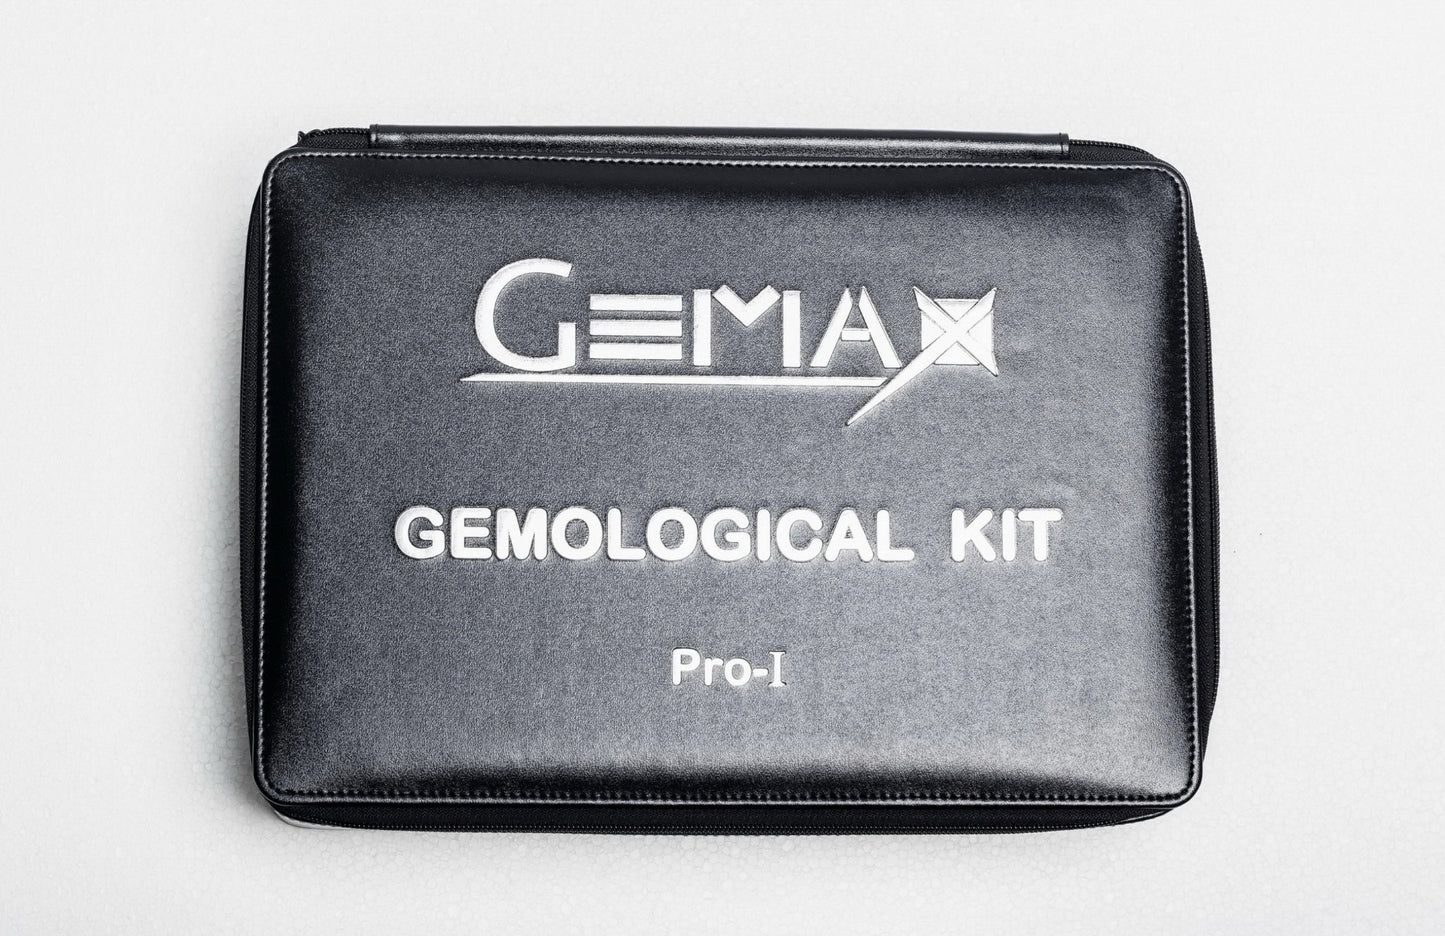 Gemax Gem Kit Pro-I